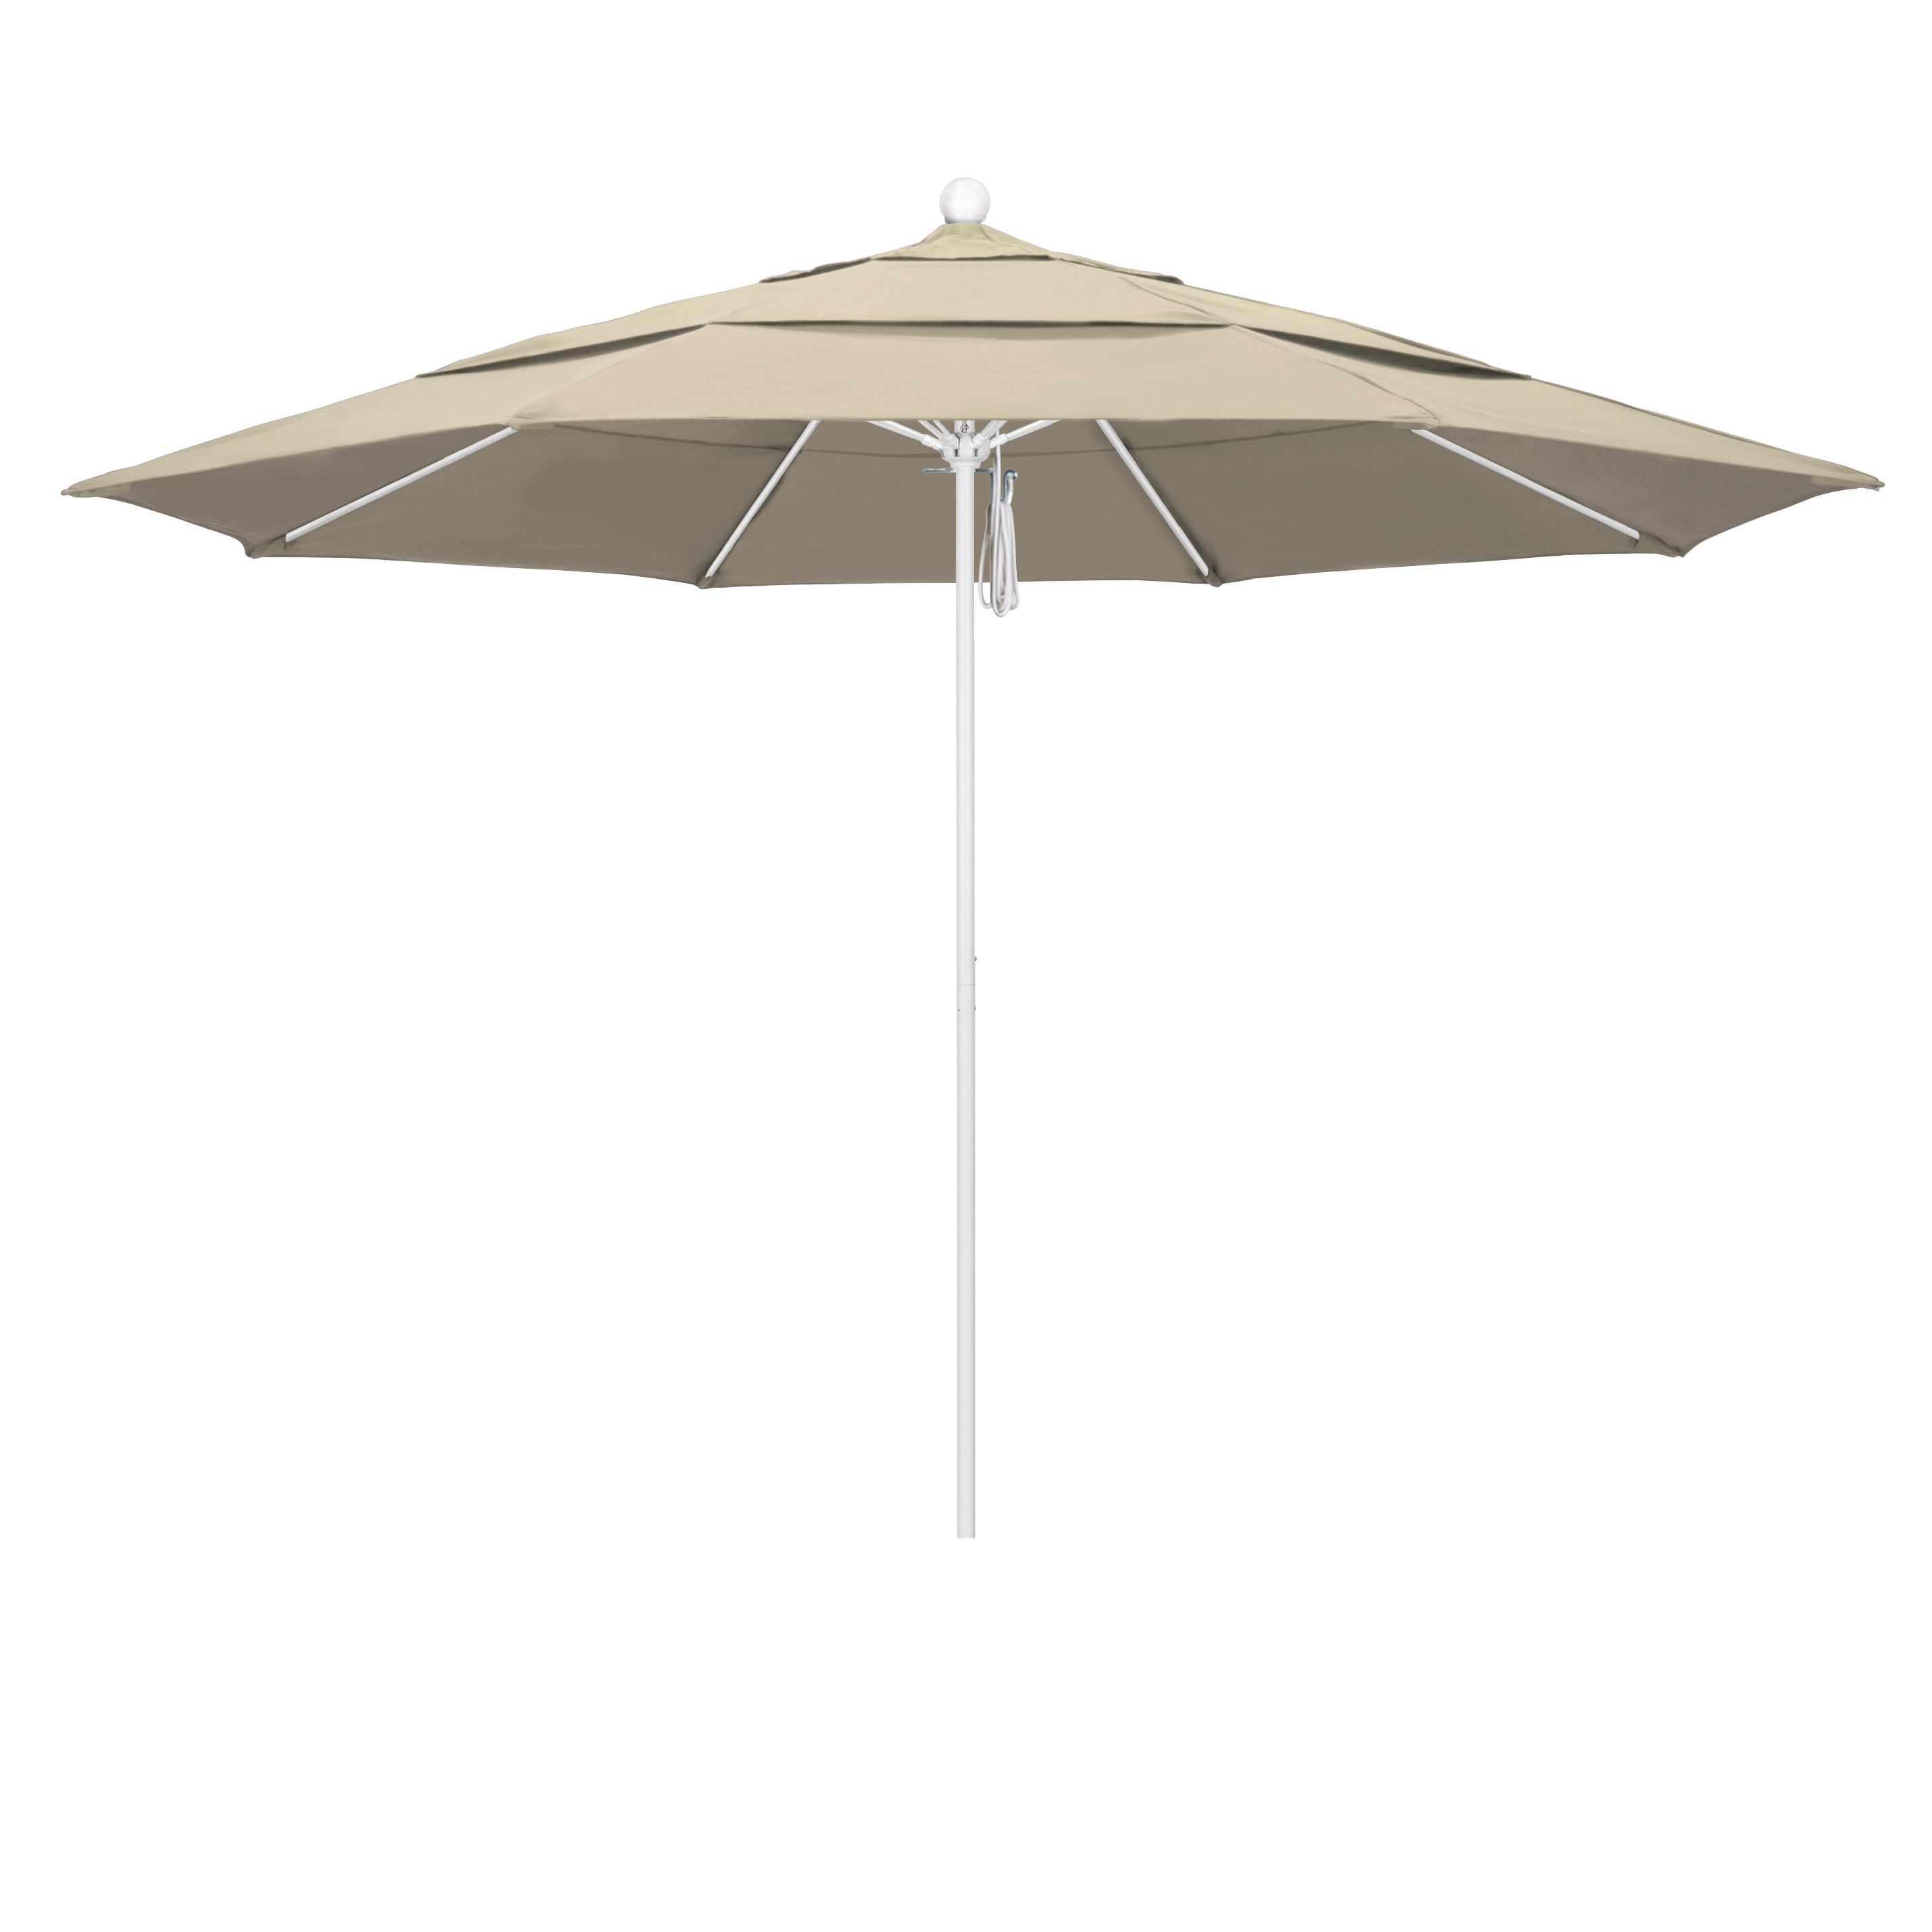 Alto118170-5422-dwv 11 Ft. Fiberglass Pulley Open Double Vents Market Umbrella - Matted White And Sunbrella-antique Beige